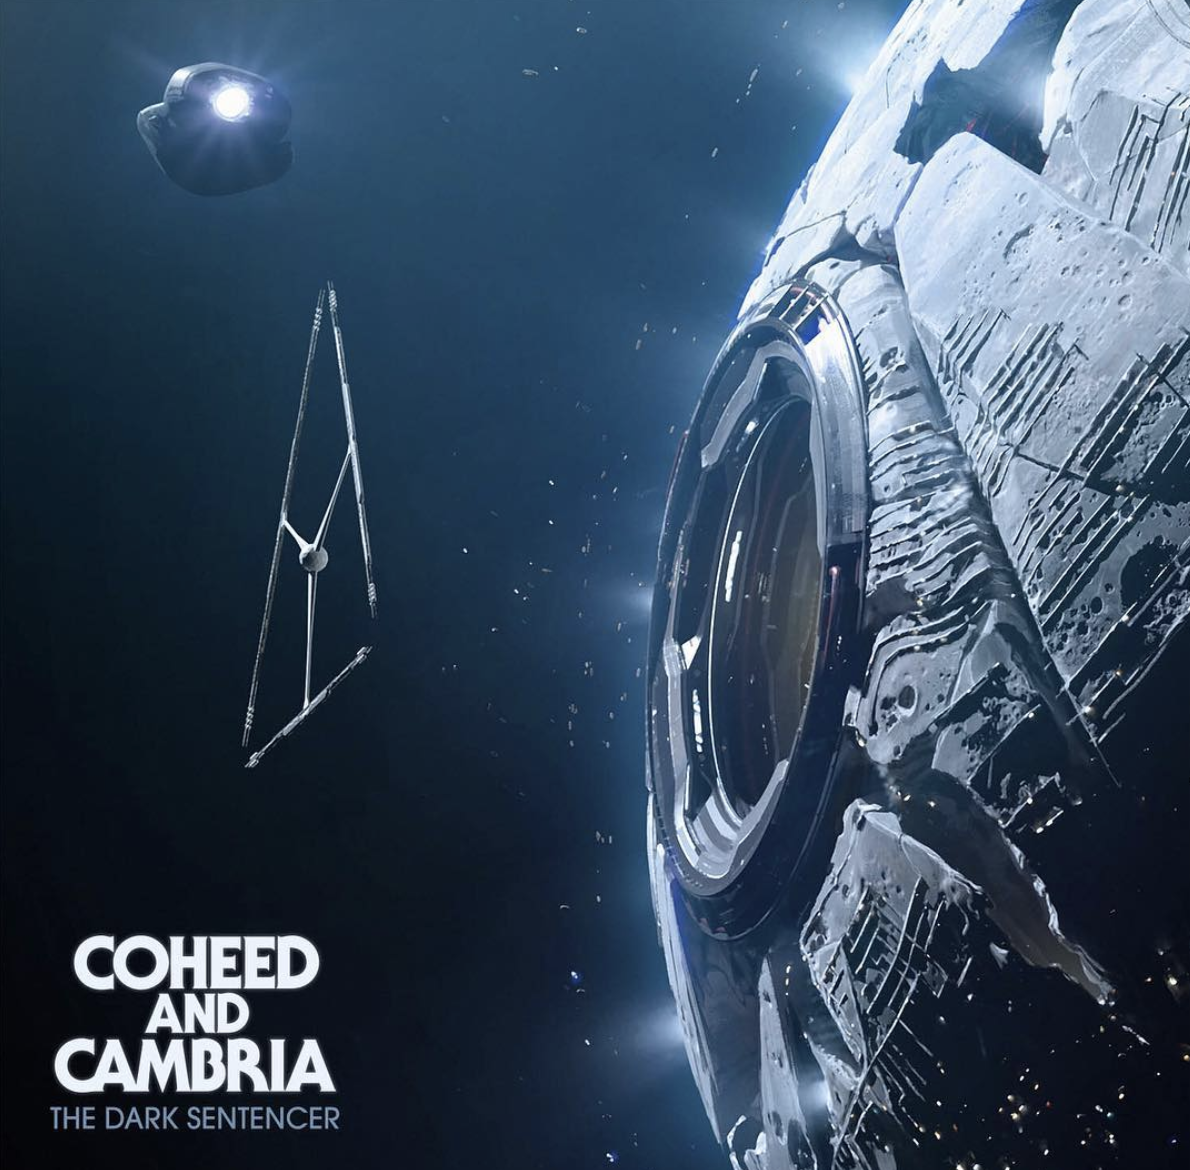 Listen to Coheed and Cambria’s new song “The Dark Sentencer”